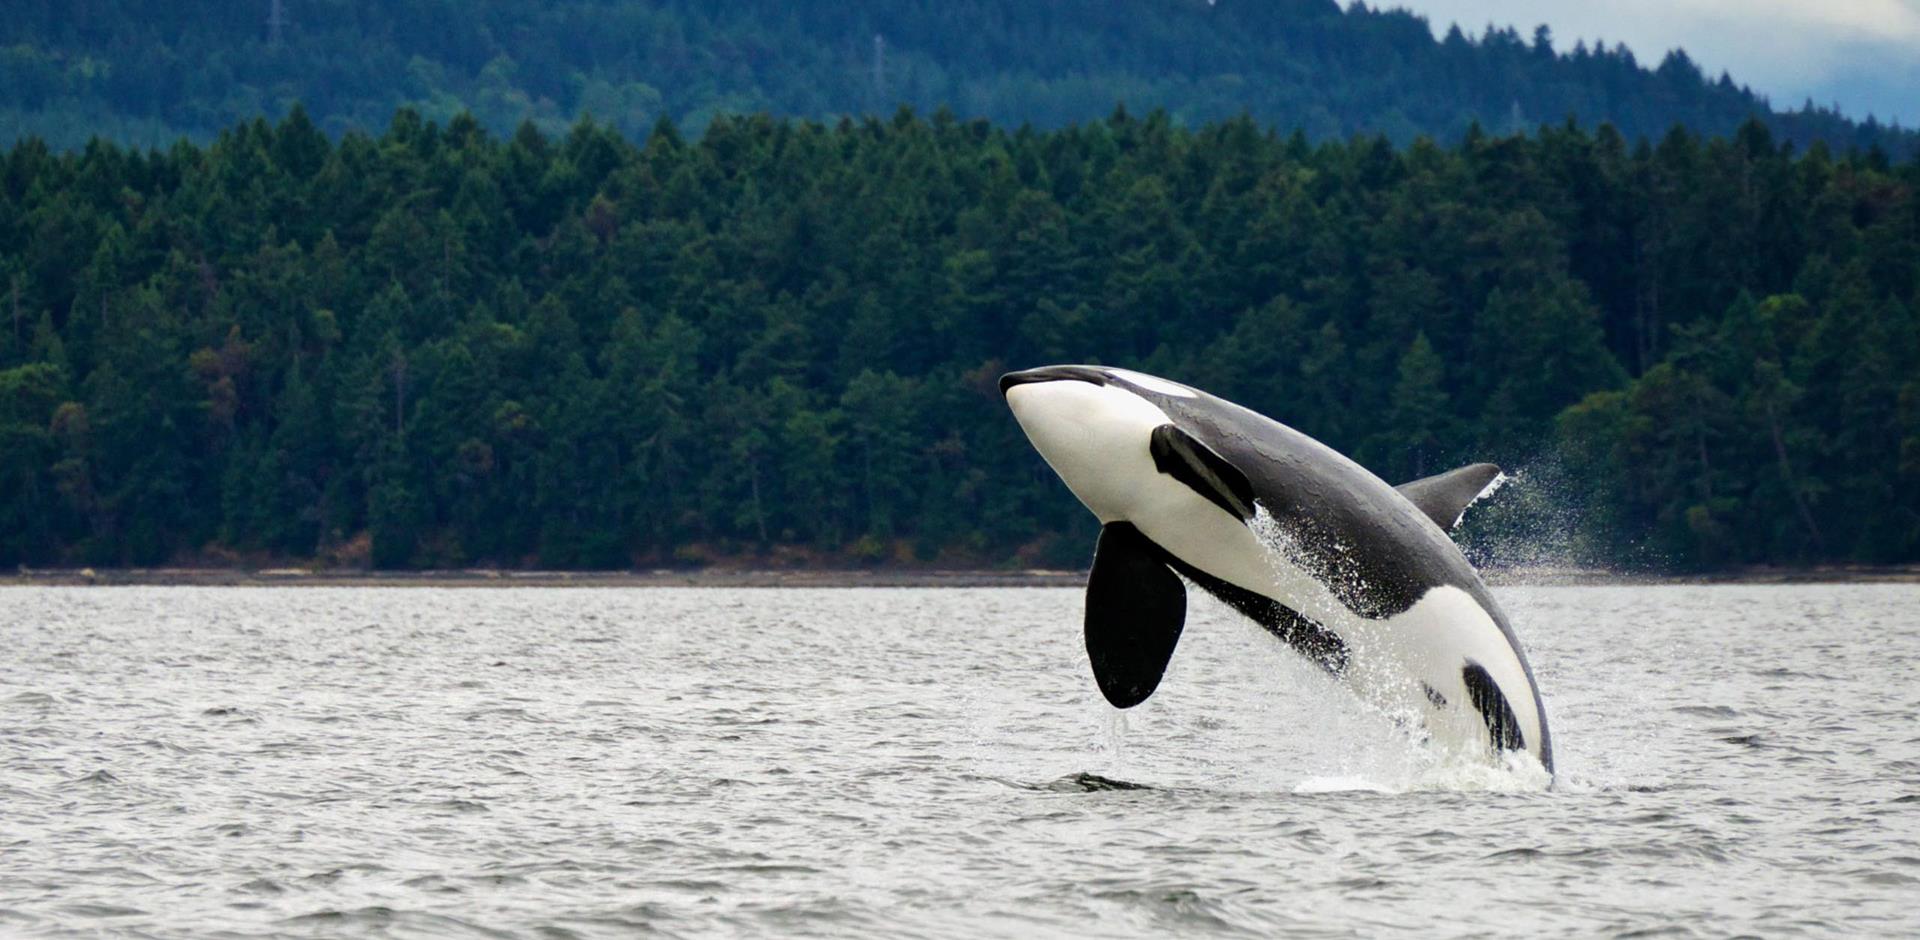 Orca, Canada